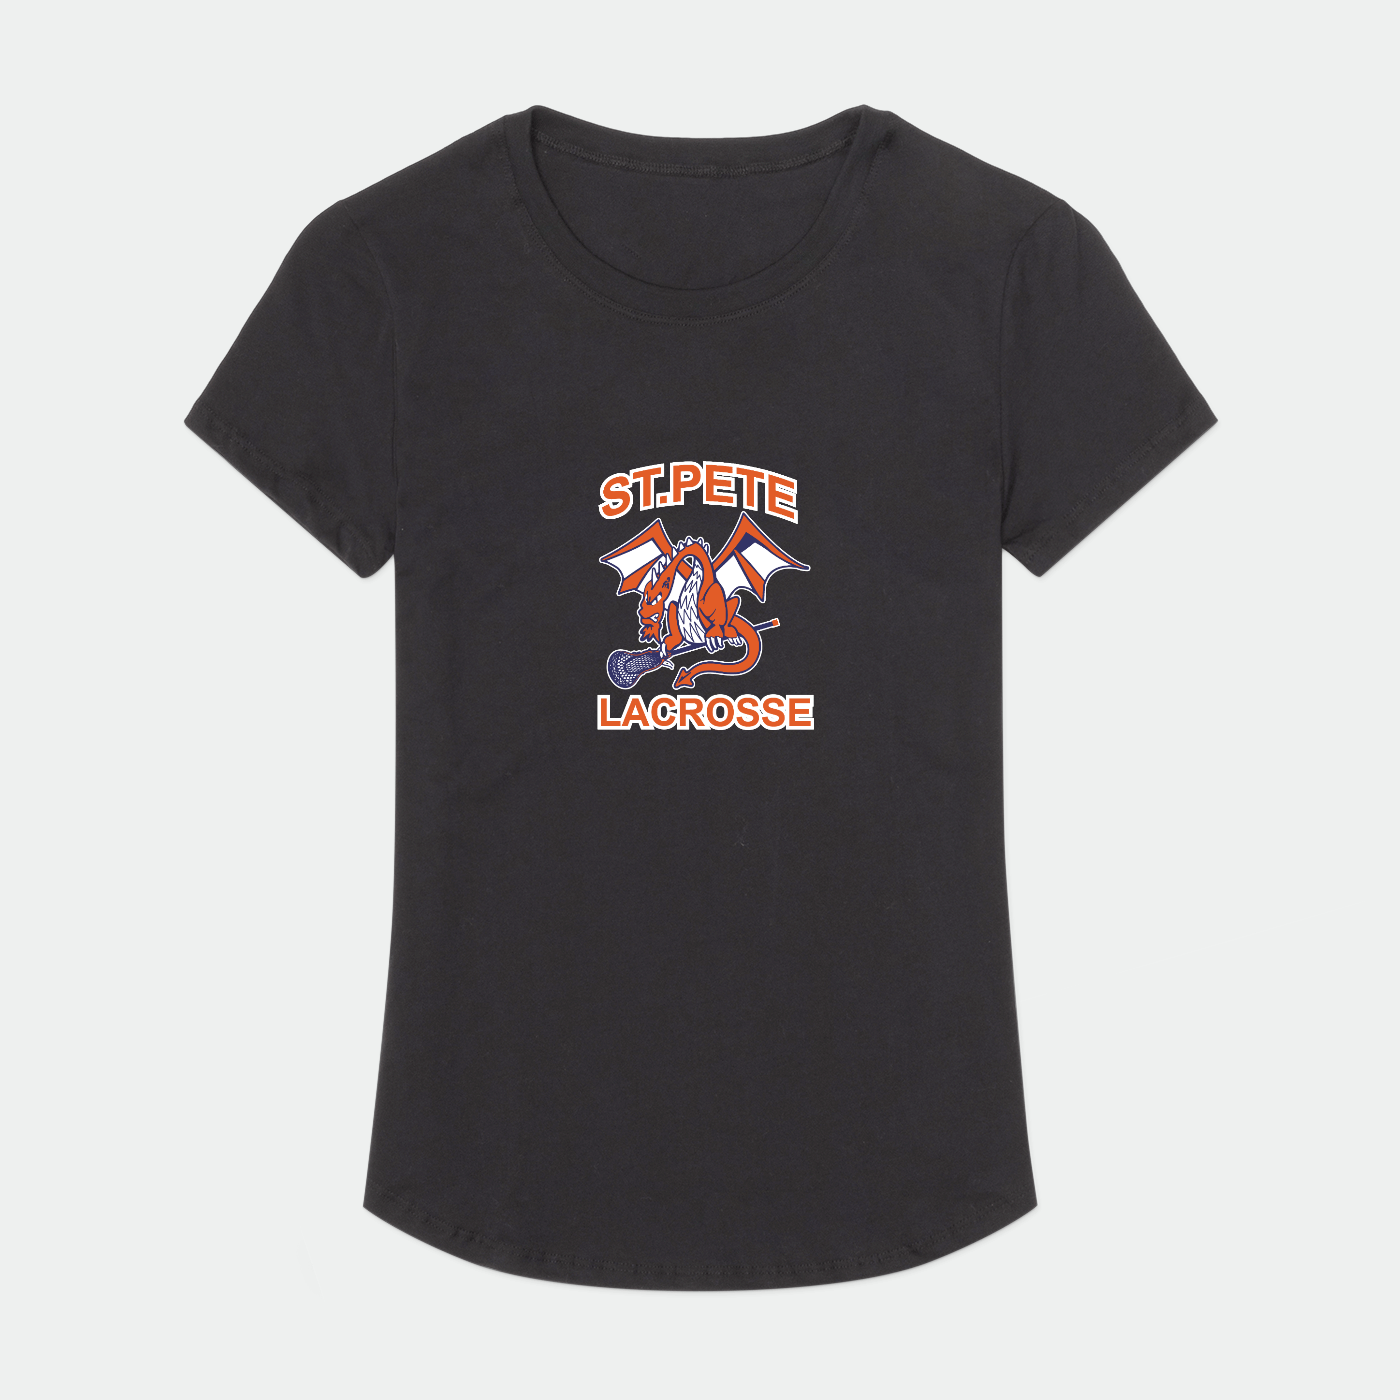 St Petersburg Lacrosse Club Adult Women's Sport T-Shirt Signature Lacrosse